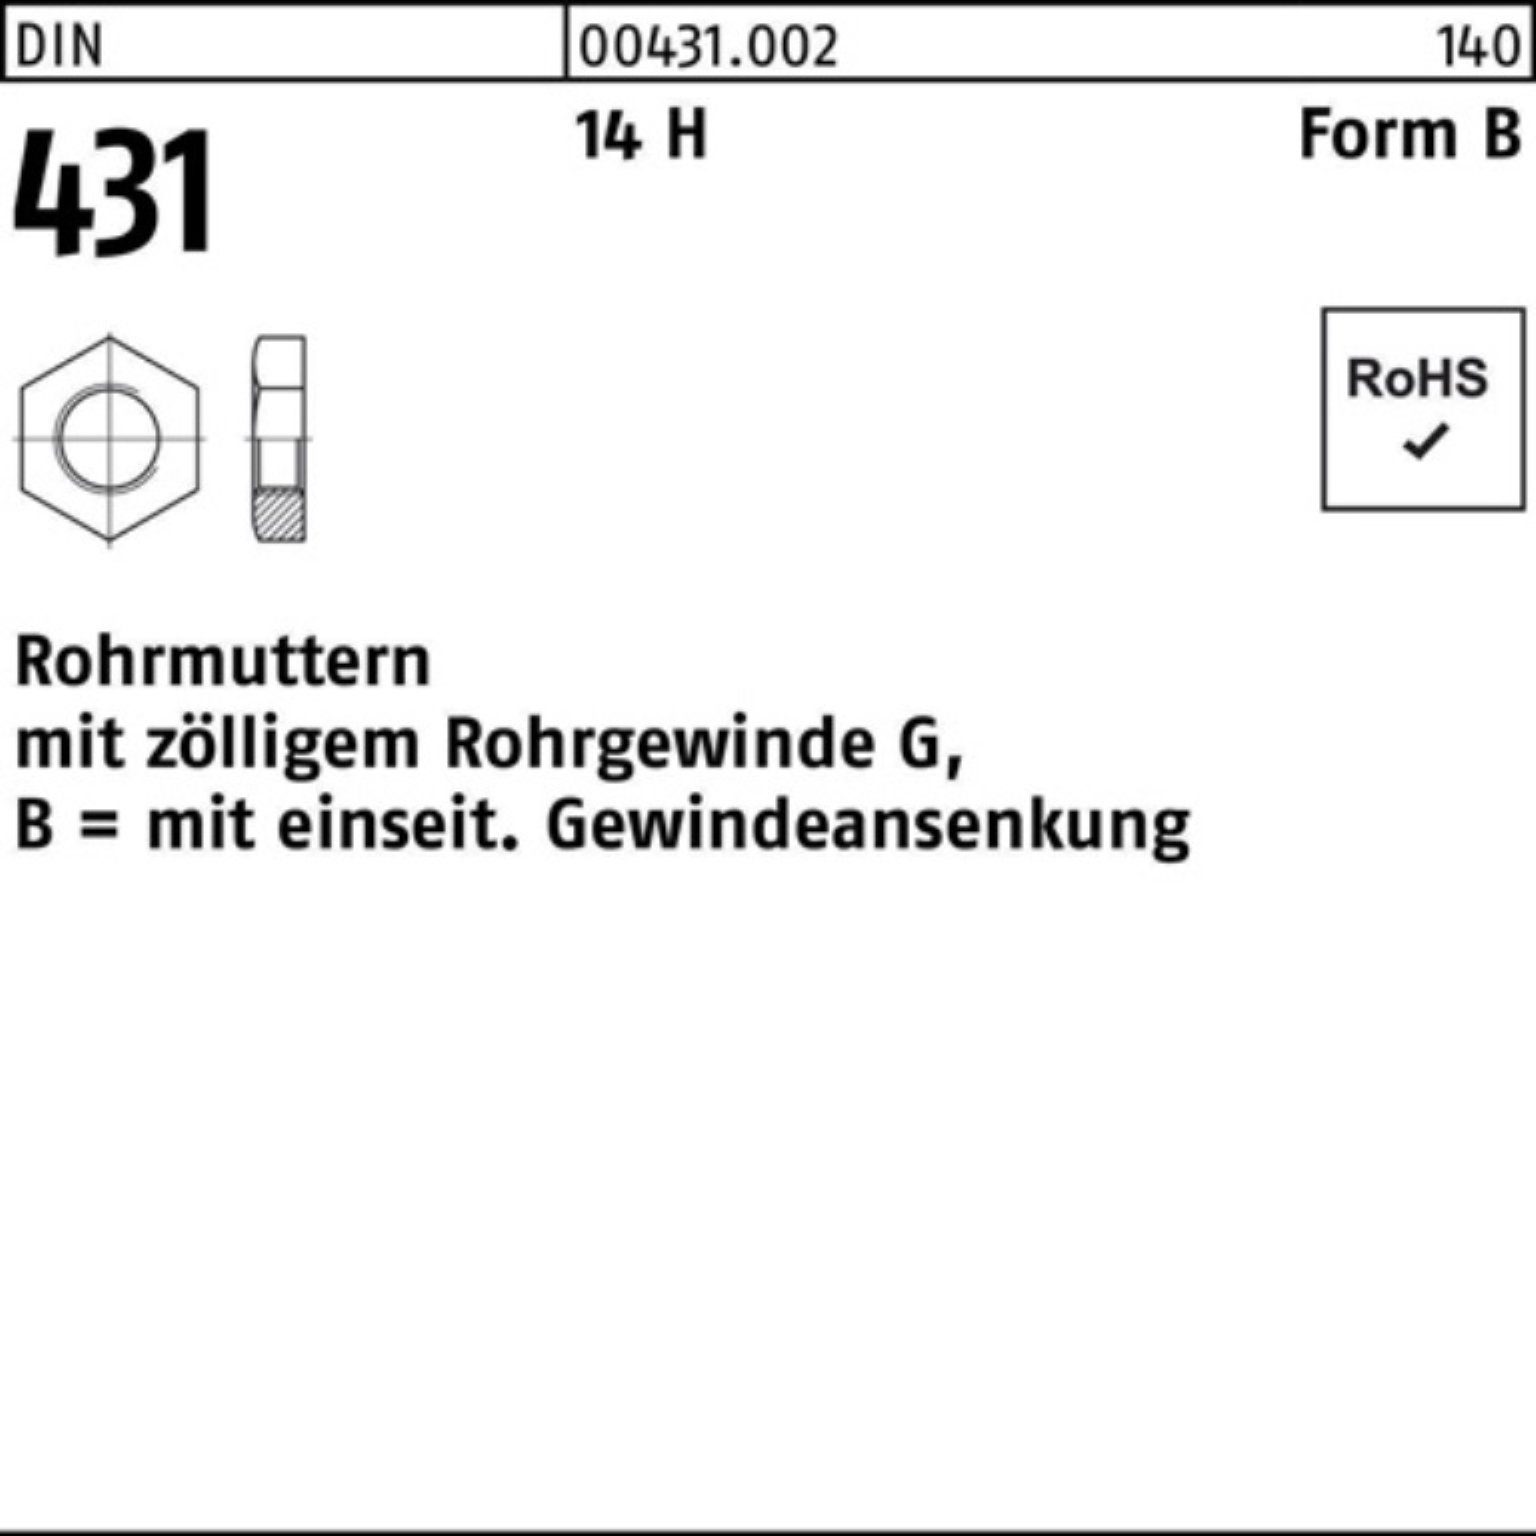 Reyher Rohrmutter 100er Pack Rohrmutter DIN 431 BG 3/4 14 H 25 Stück DIN 431 14 H Form